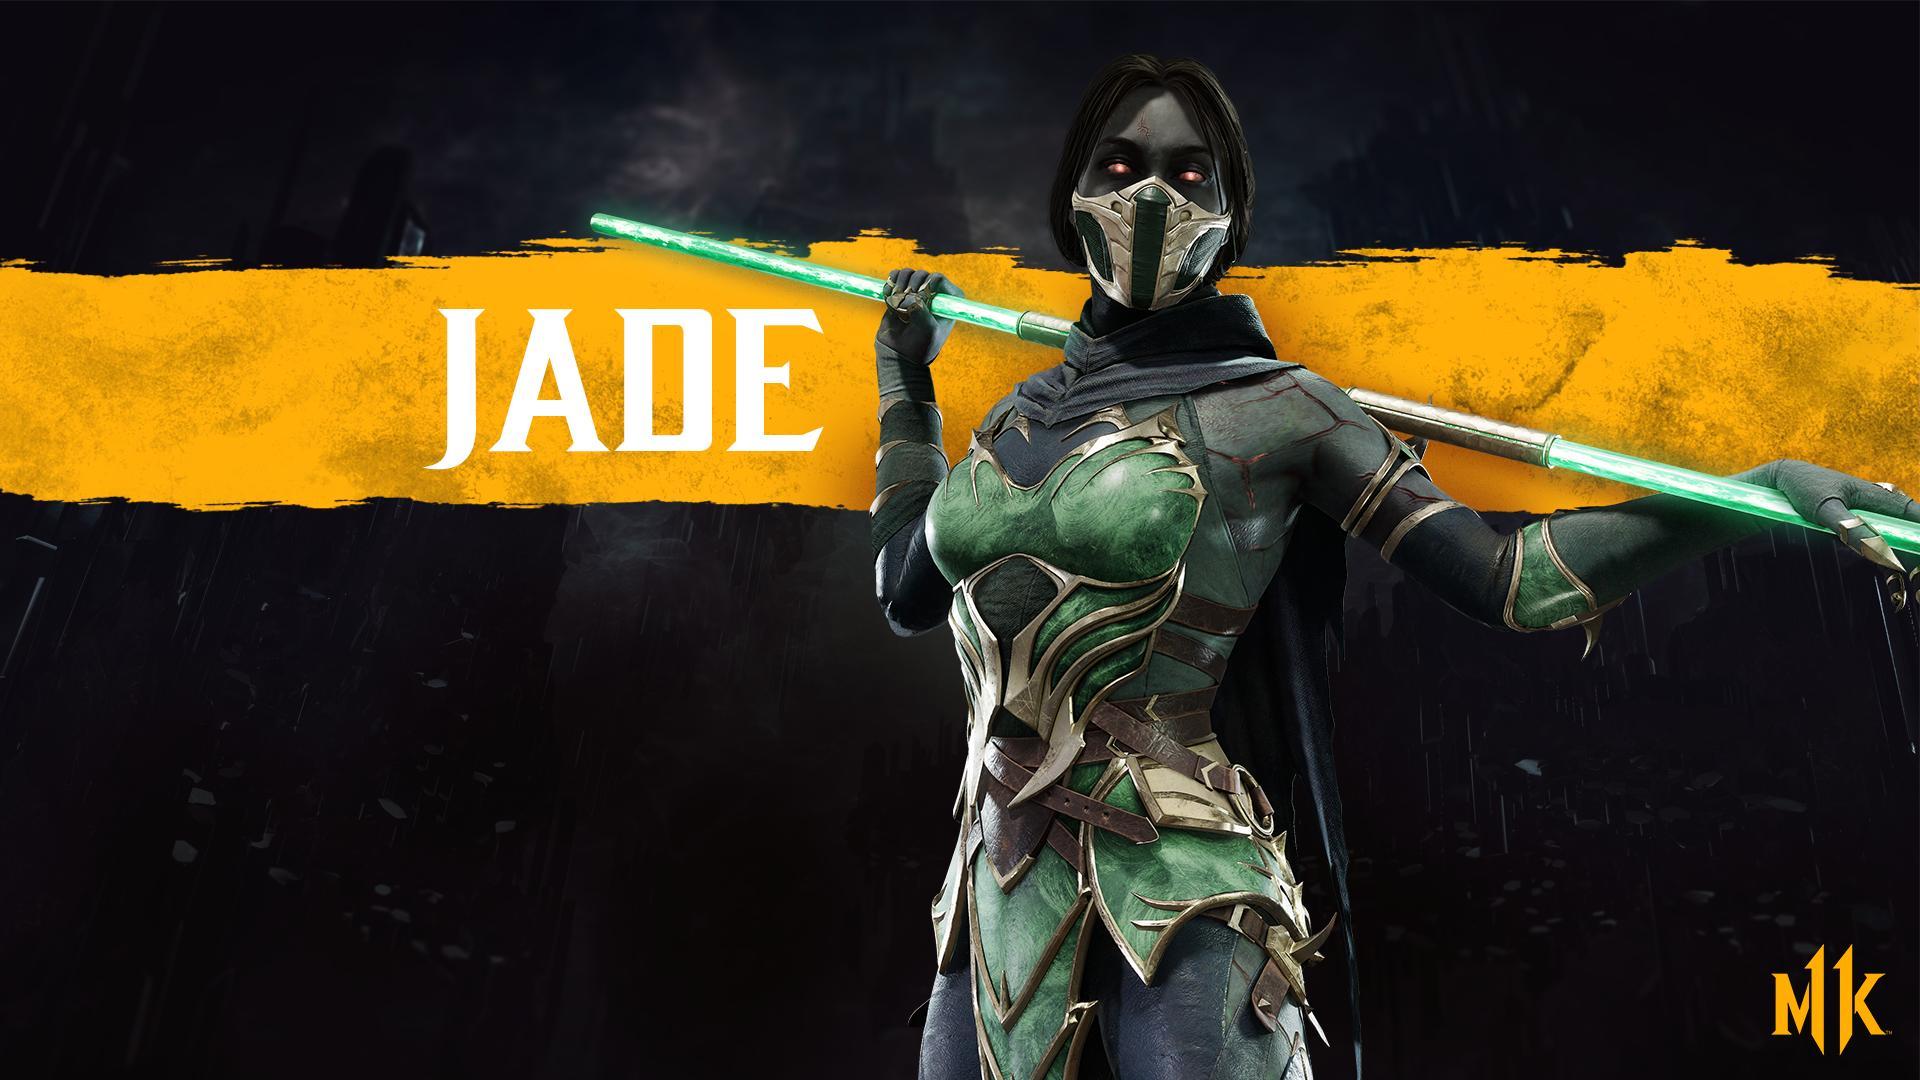 Mortal Kombat 11 Roster: Jade Confirmed, Fatality, Burtality Revealed